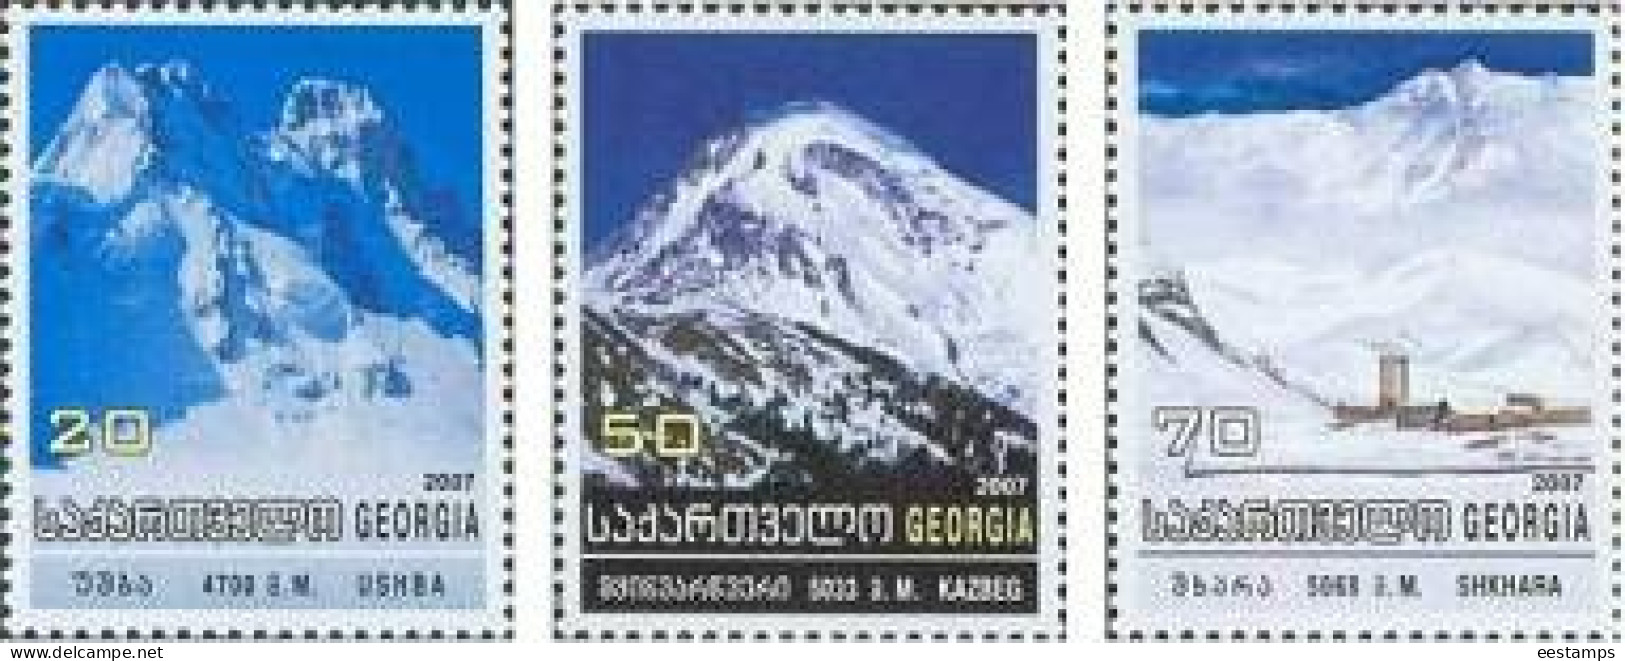 Georgia 2008 . Mountains. 3v.  Michel # 535-38 - Géorgie